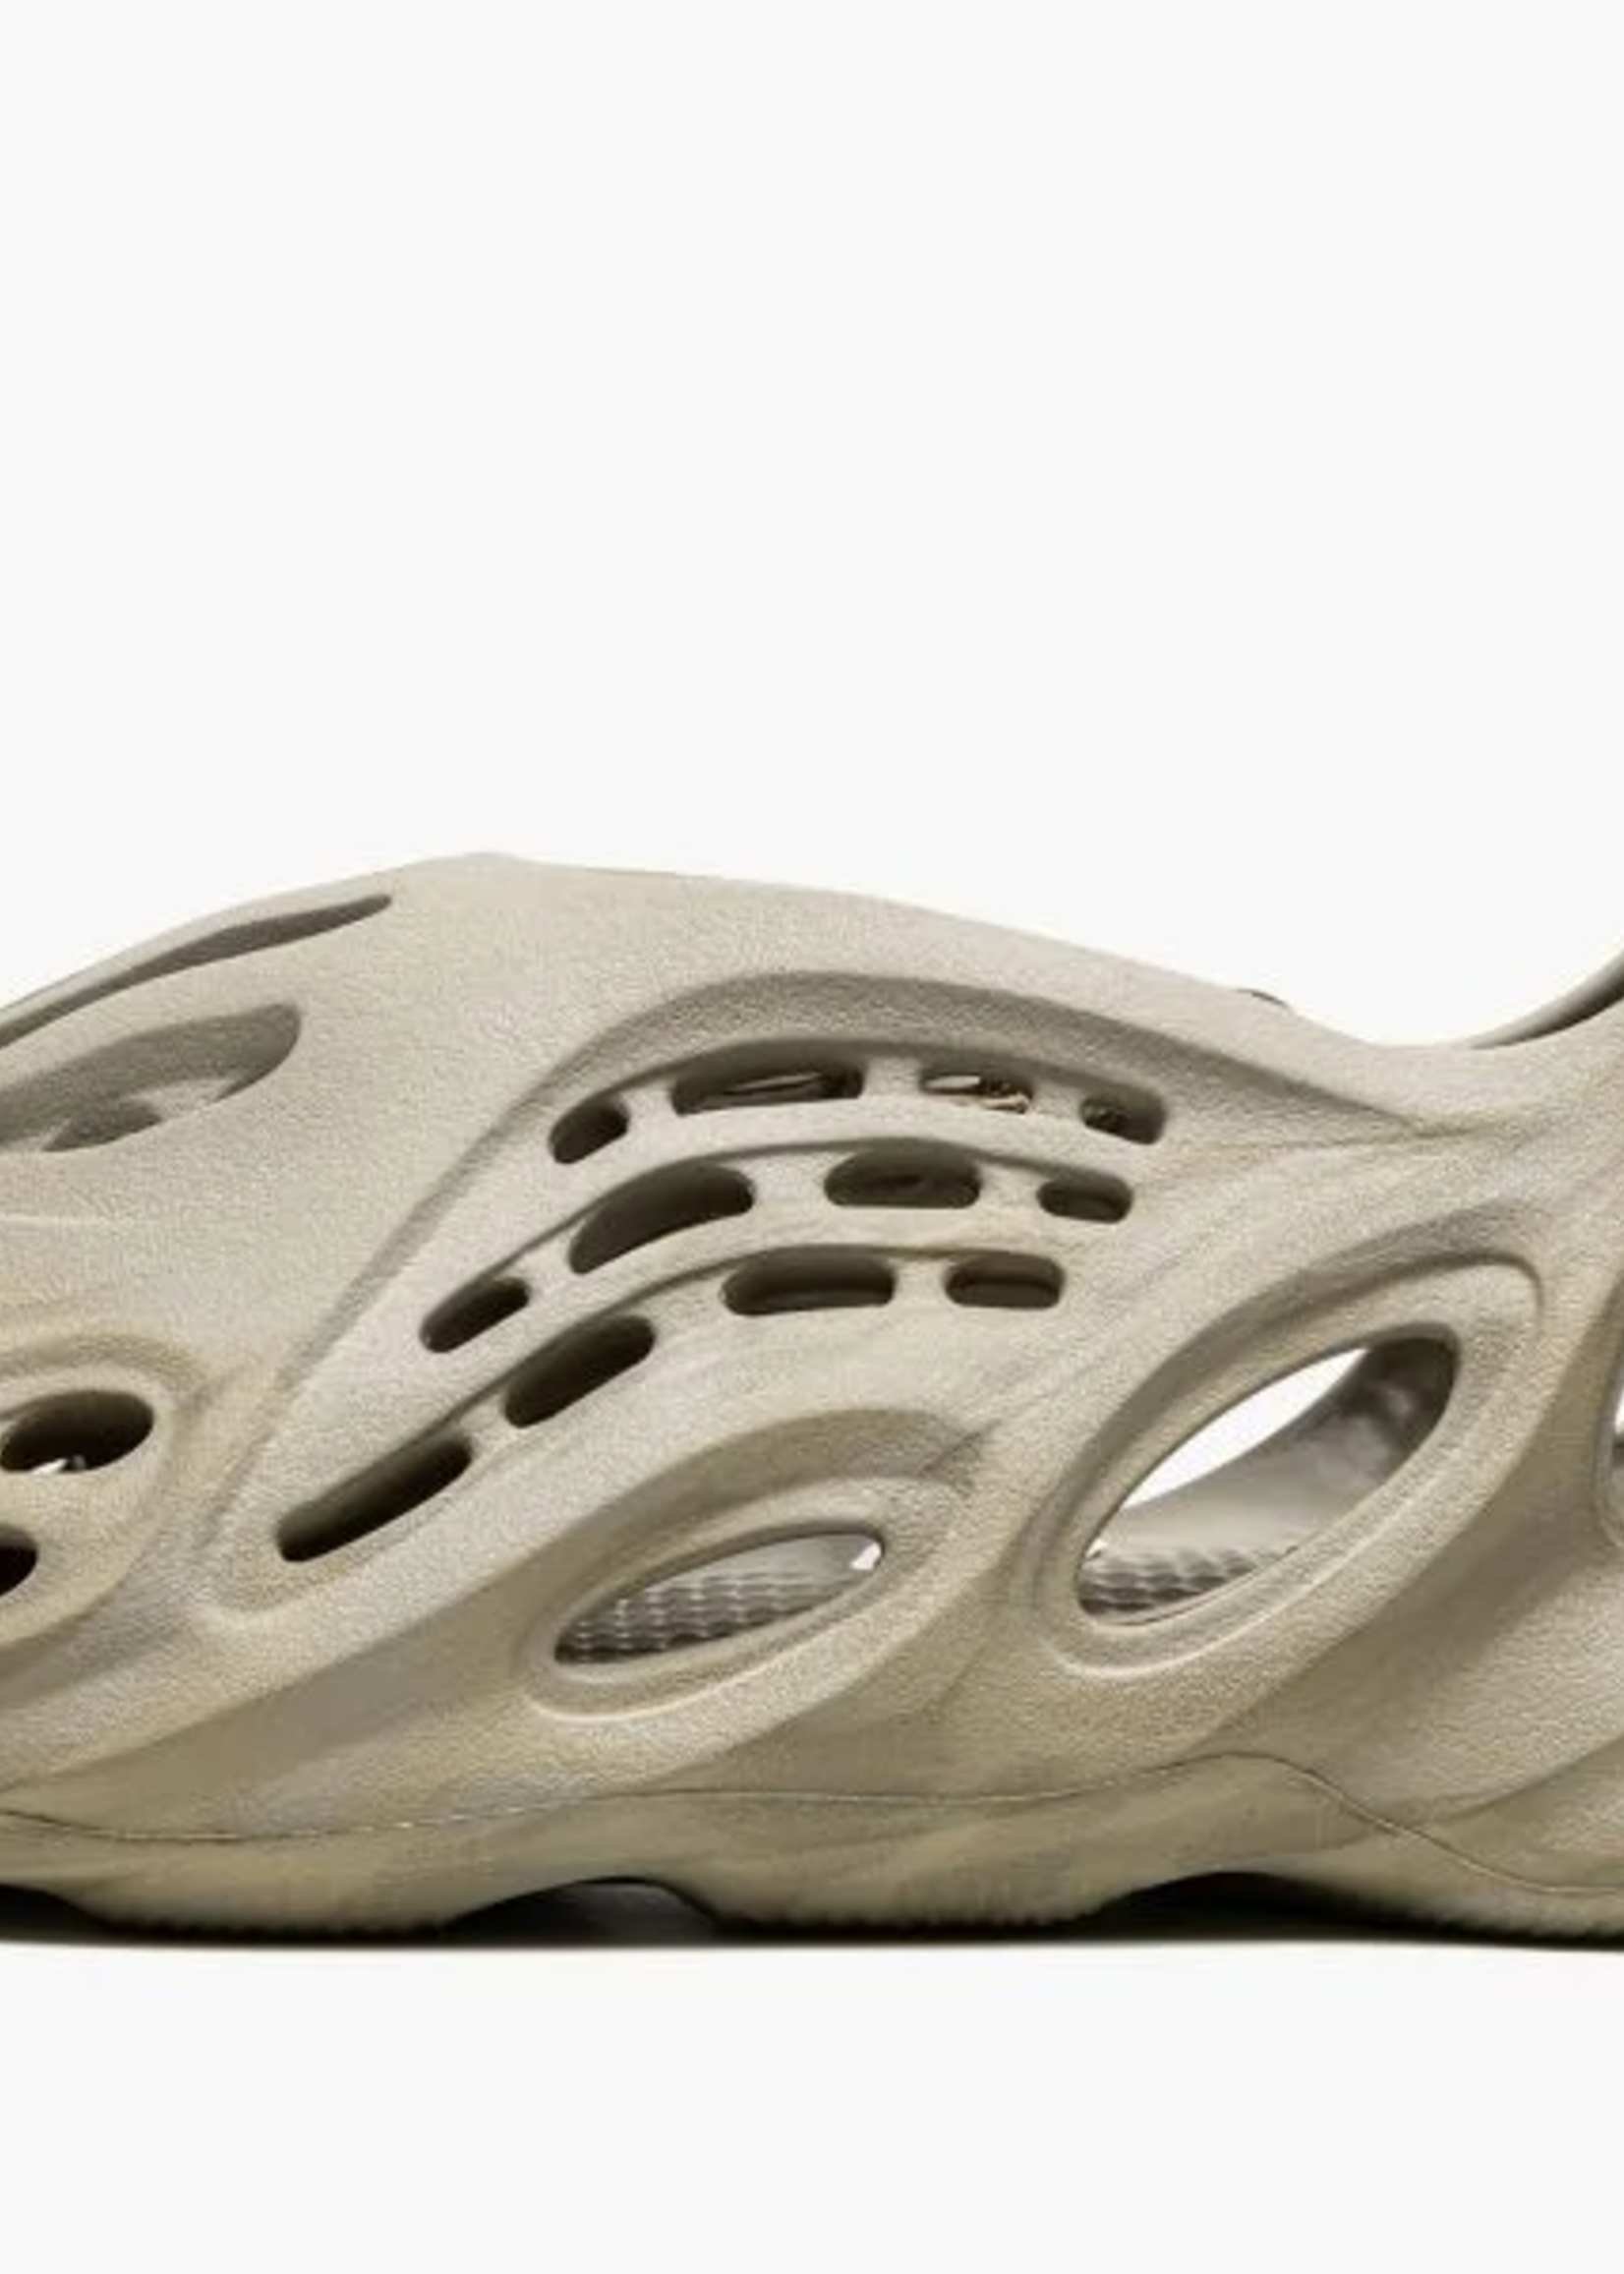 adidas Yeezy Foam Runner RNNR Stone Sage GX4472 - All Sizes - Express  Shipping